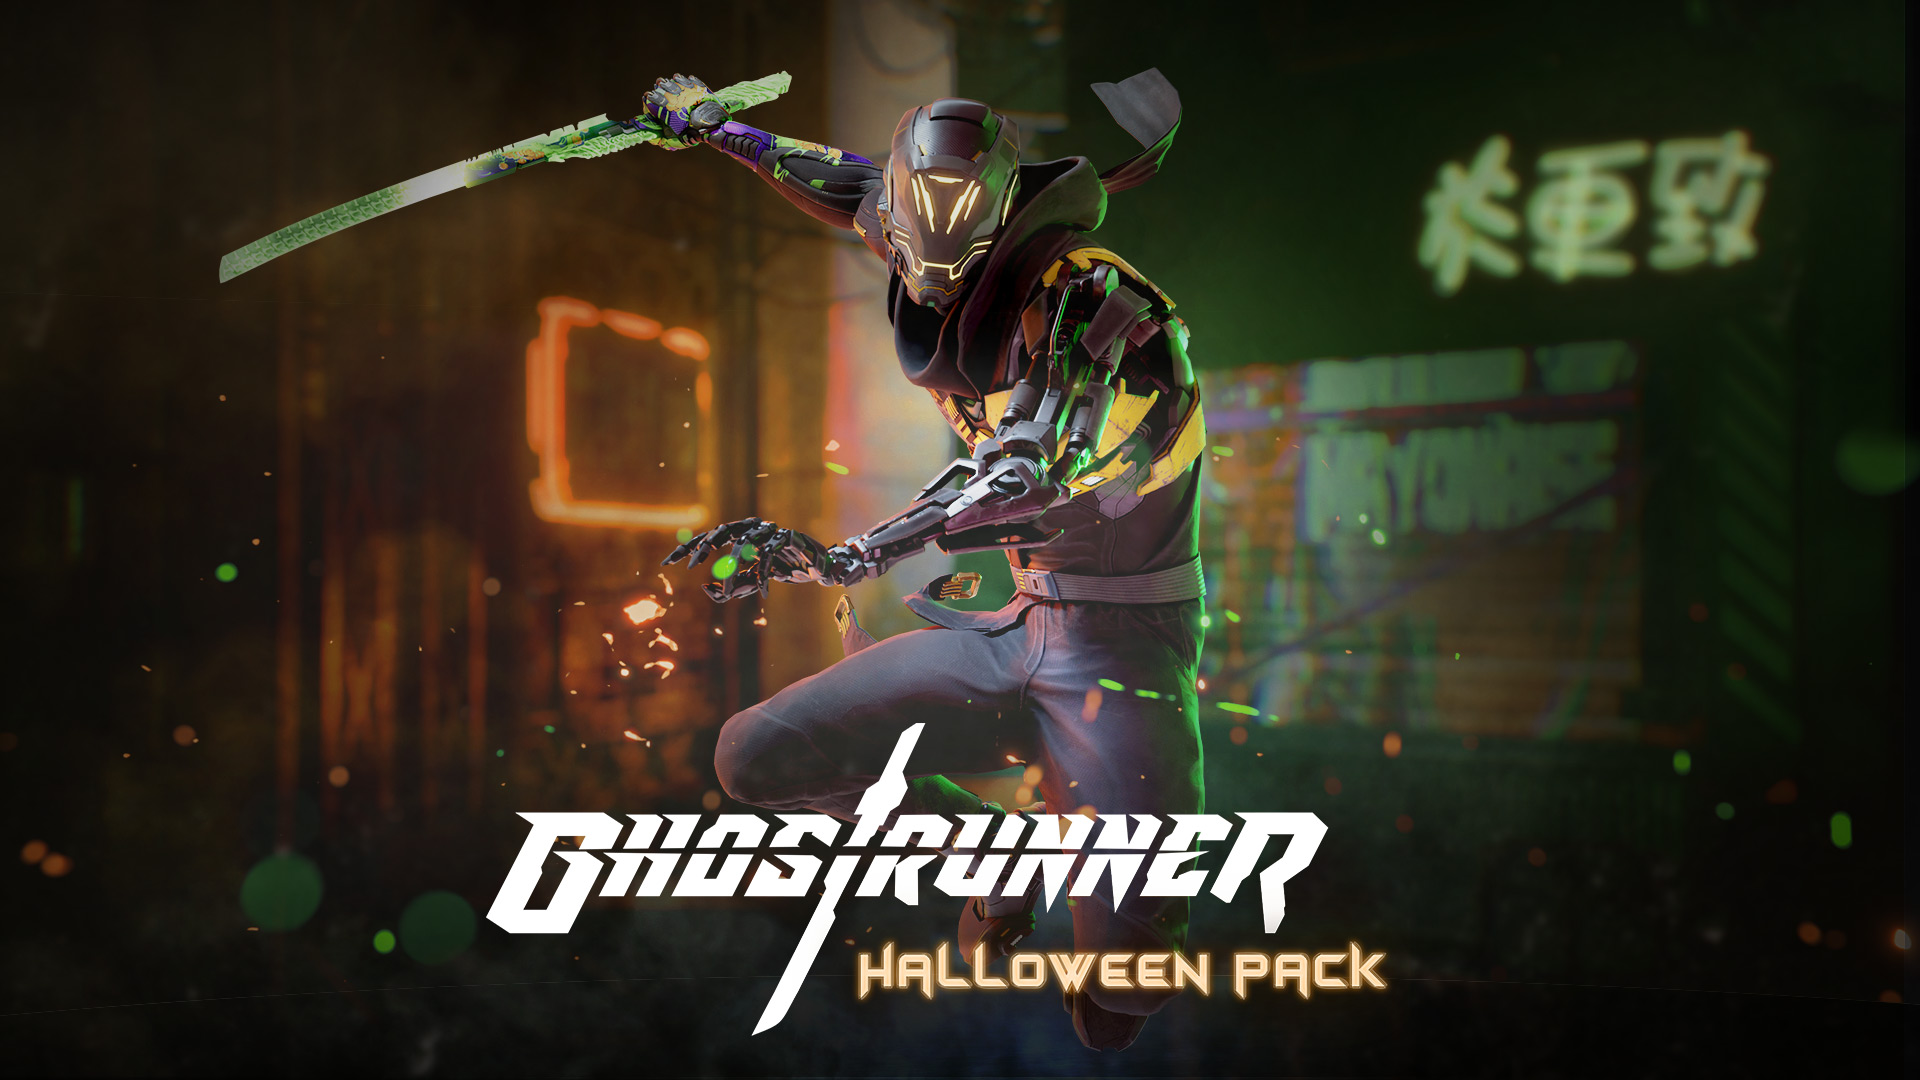 Ghostrunner: Halloween Pack